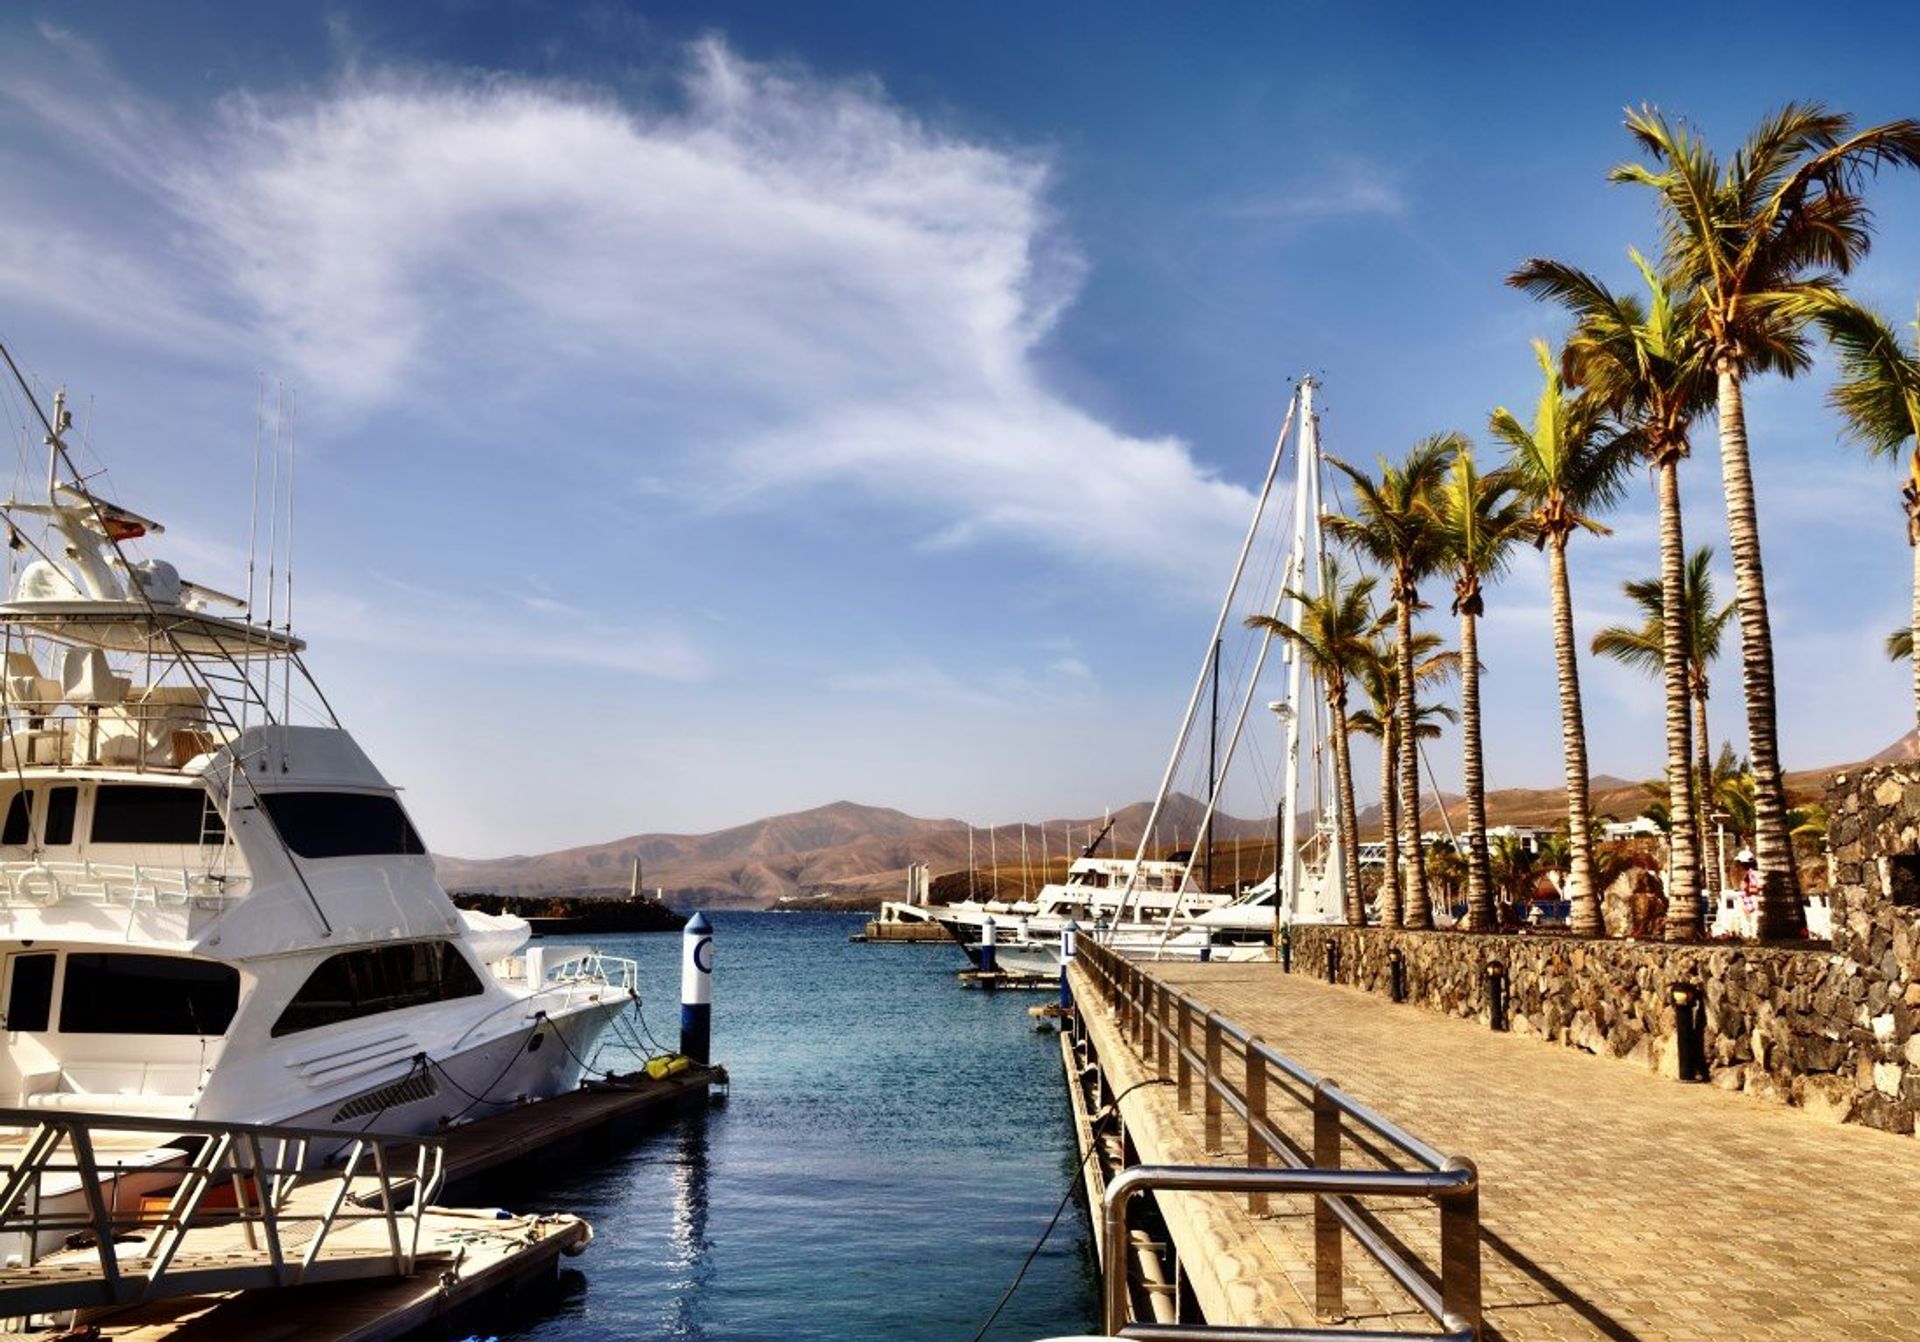 Watch the world go by at Puerto Calero's luxury marina